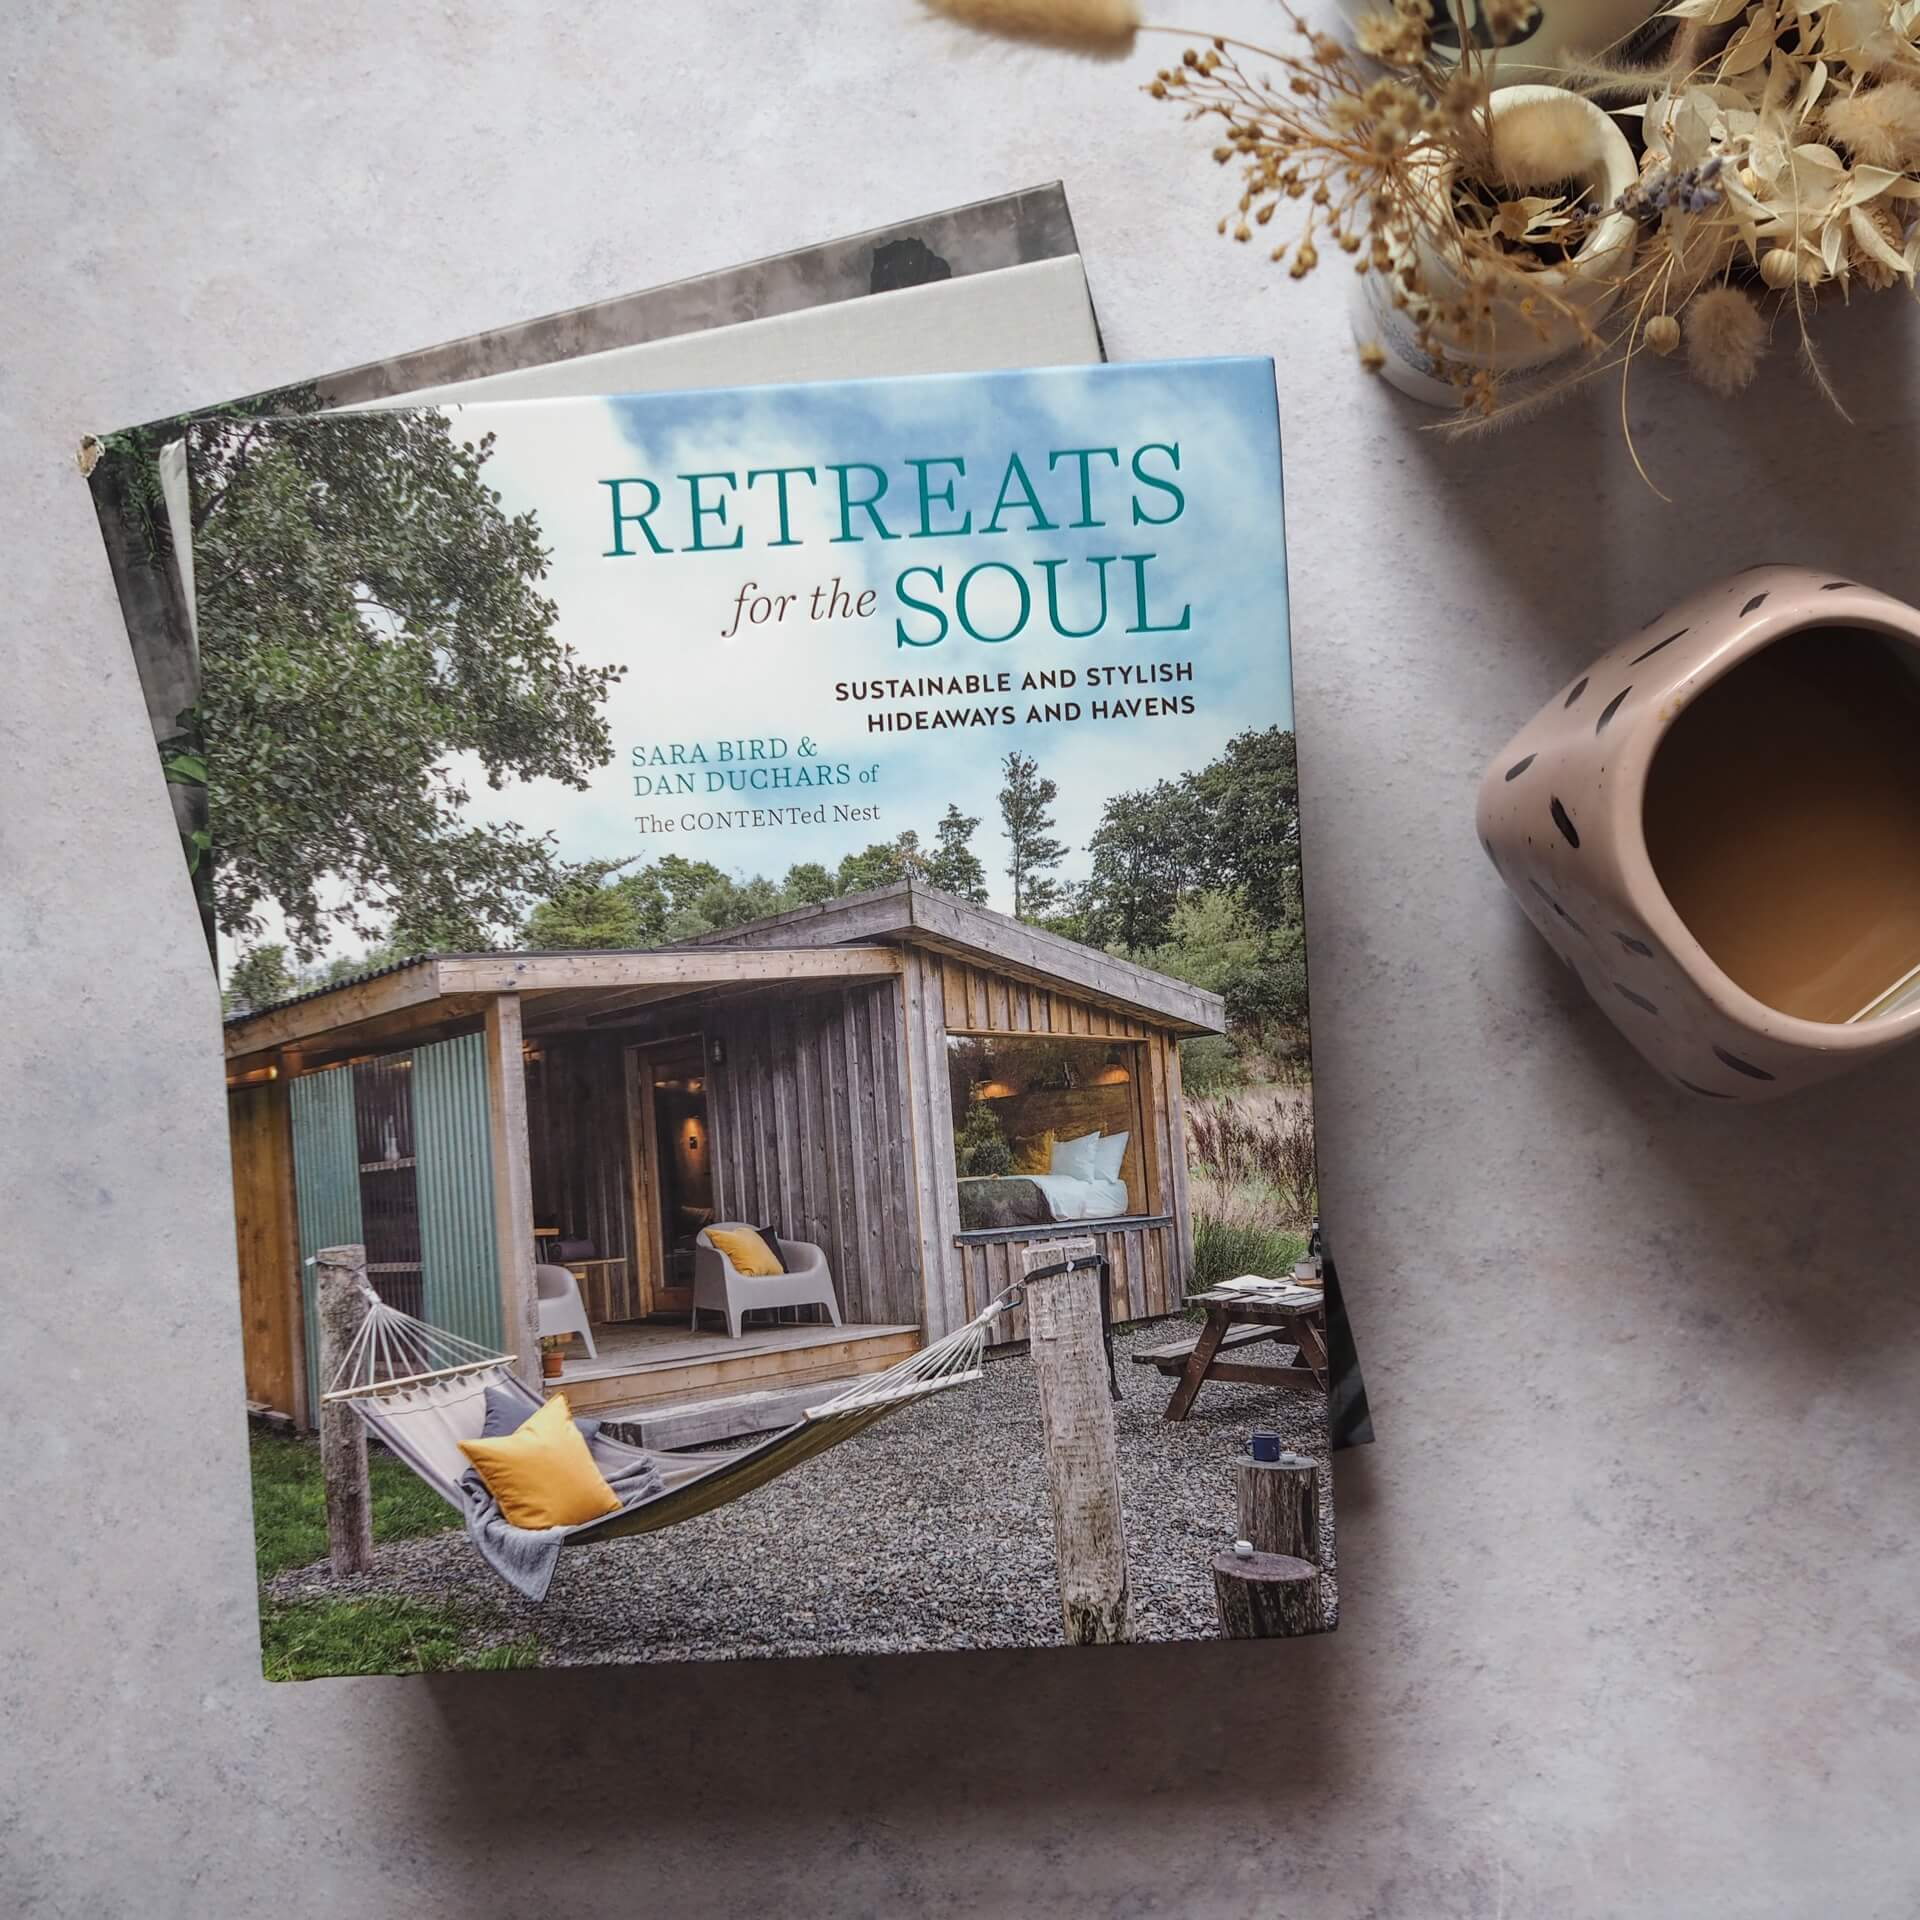 Retreats for the soul by Sara Bird & Dan Duchars